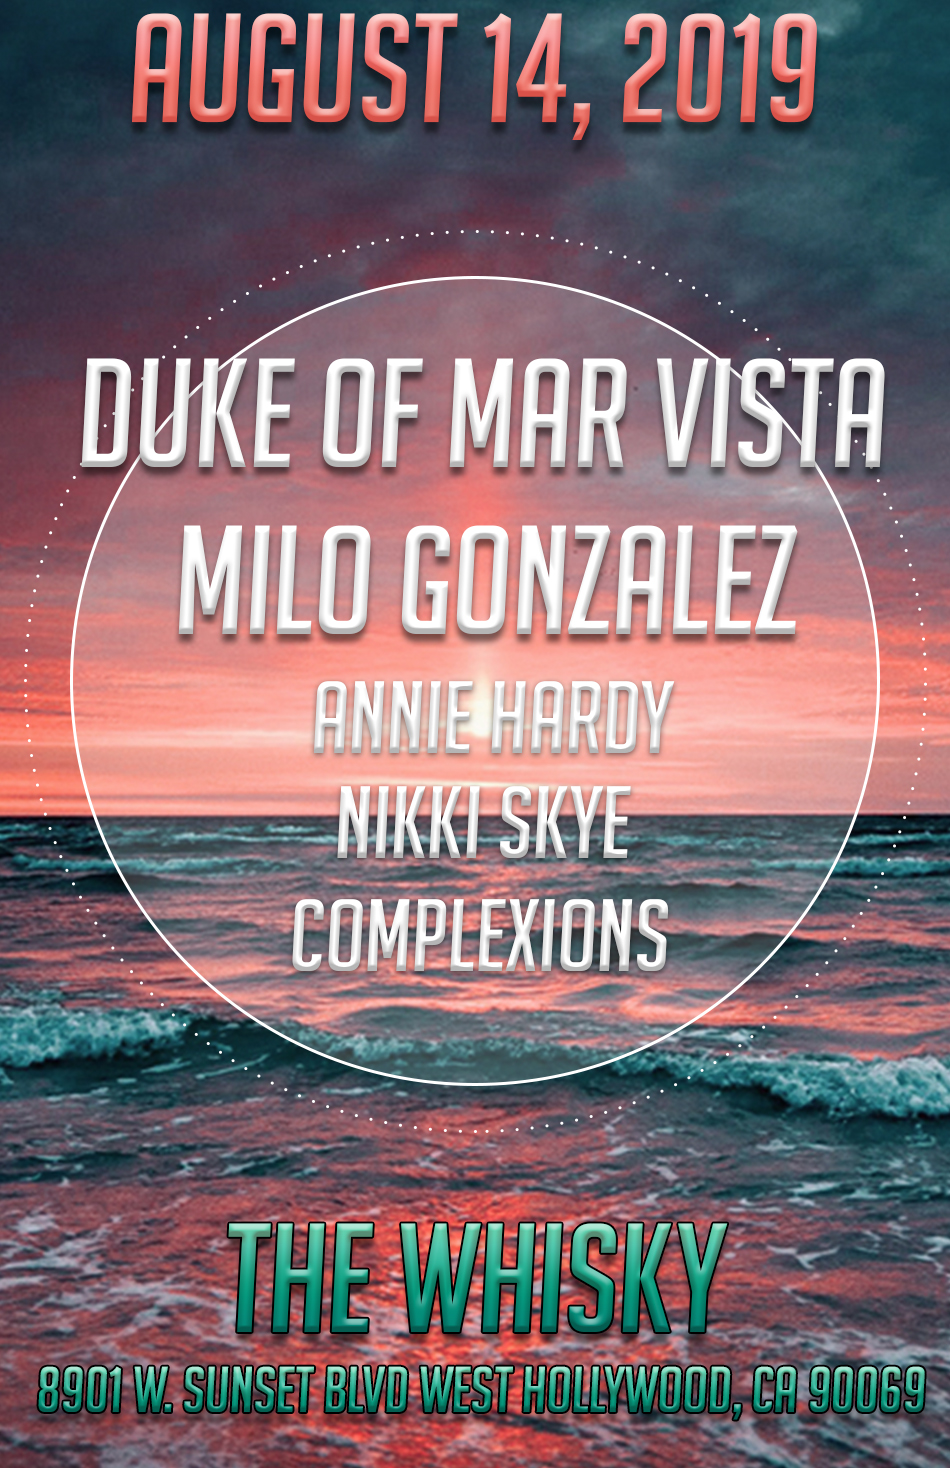 Duke of Mar Vista, Milo Gonzalez, Annie Hardy, Nikki Skye, Complexions